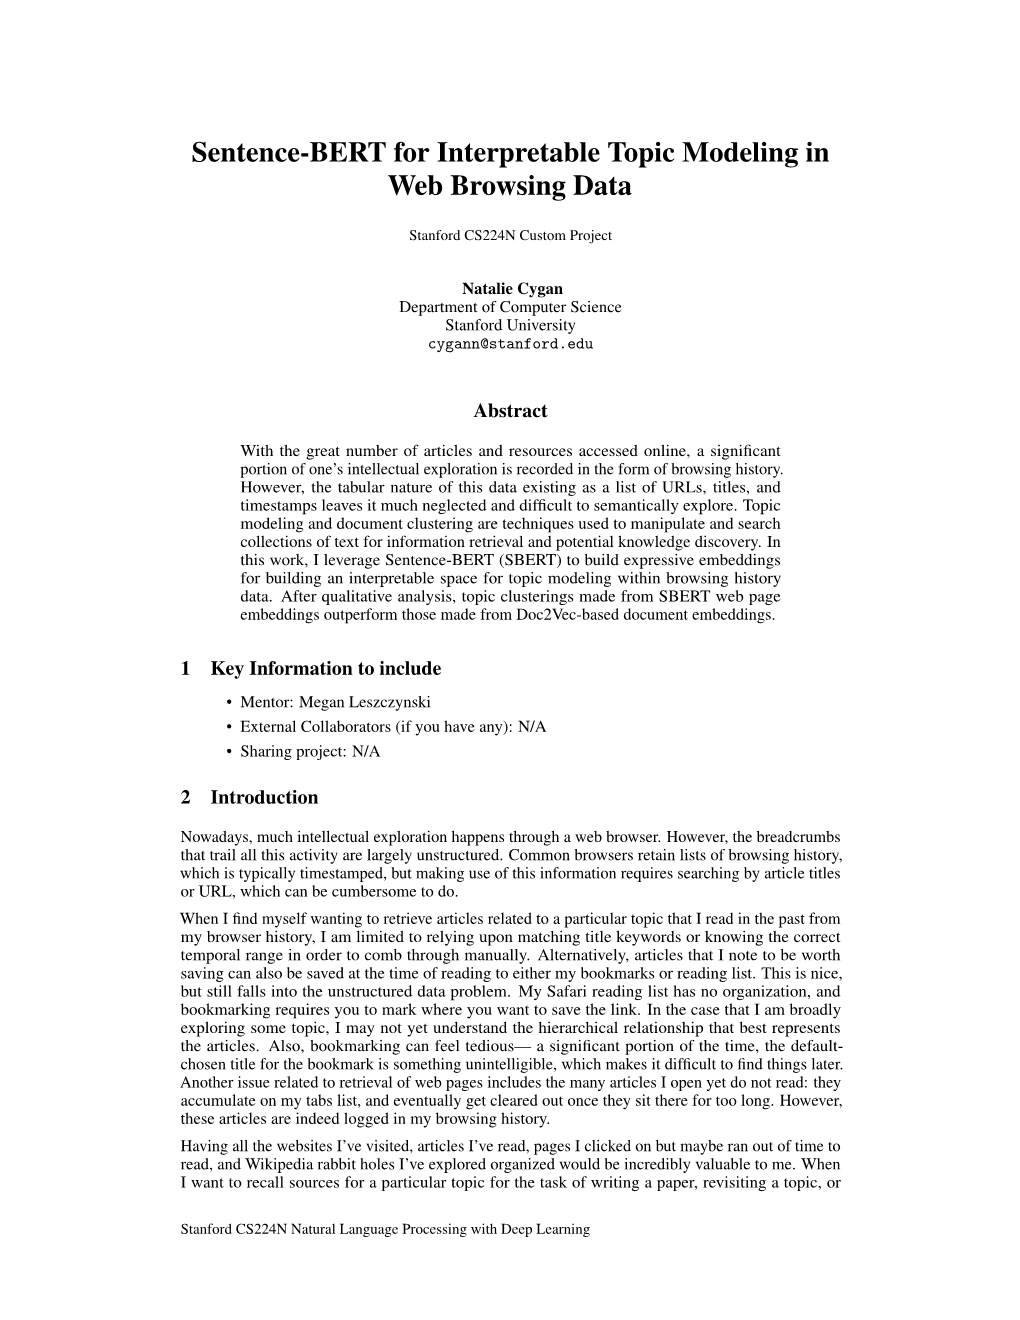 Sentence-BERT for Interpretable Topic Modeling in Web Browsing Data